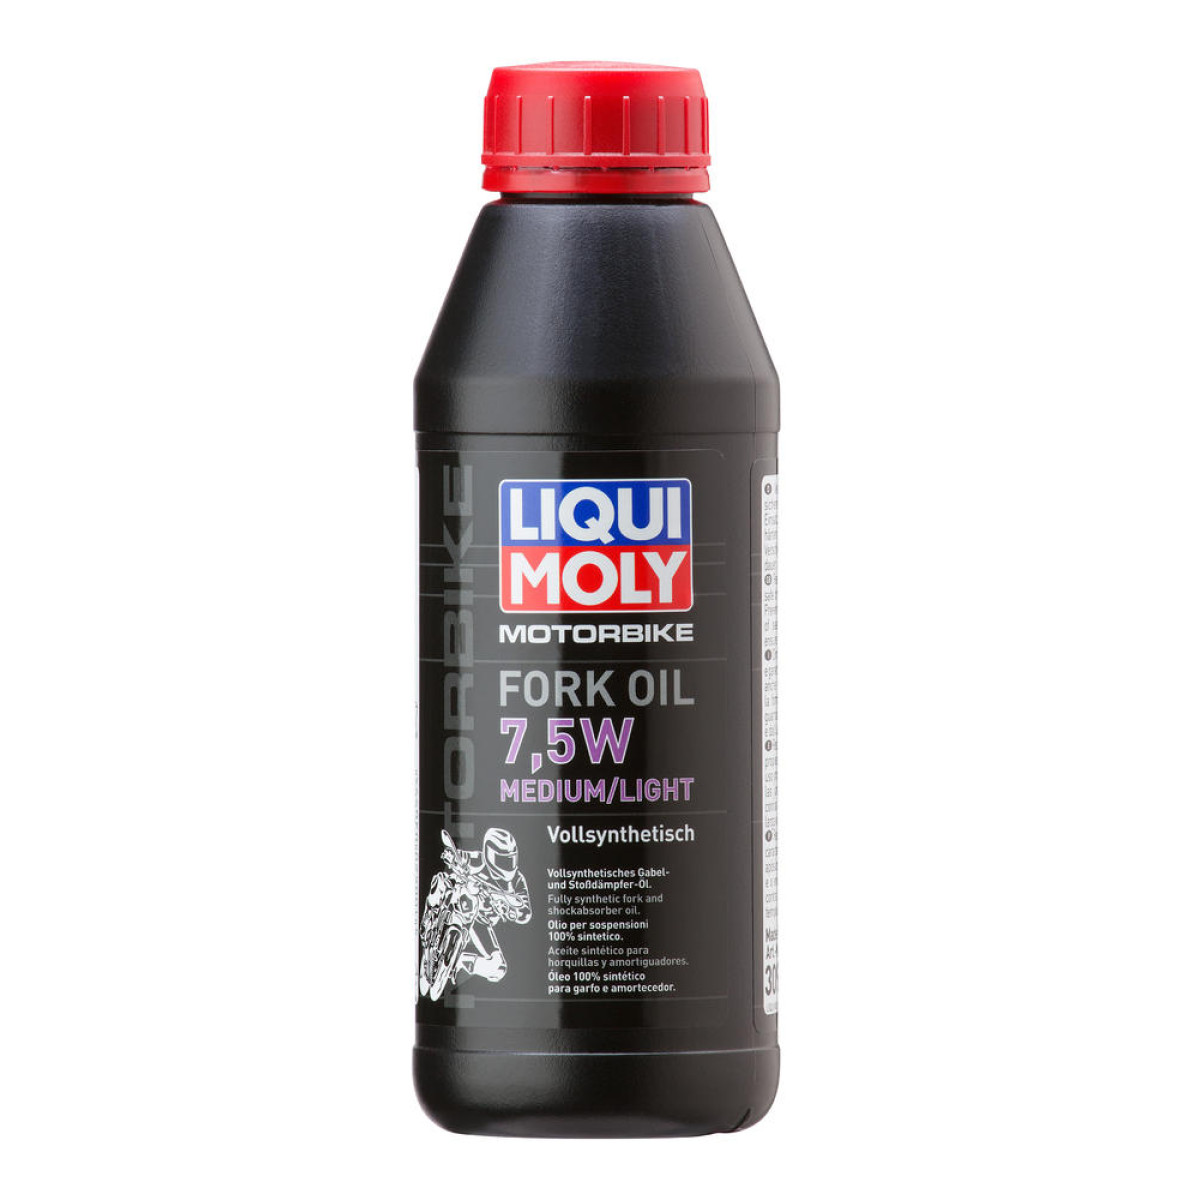 Liqui Moly Gabelöl  Medium/Light, 7.5W, 500 ml